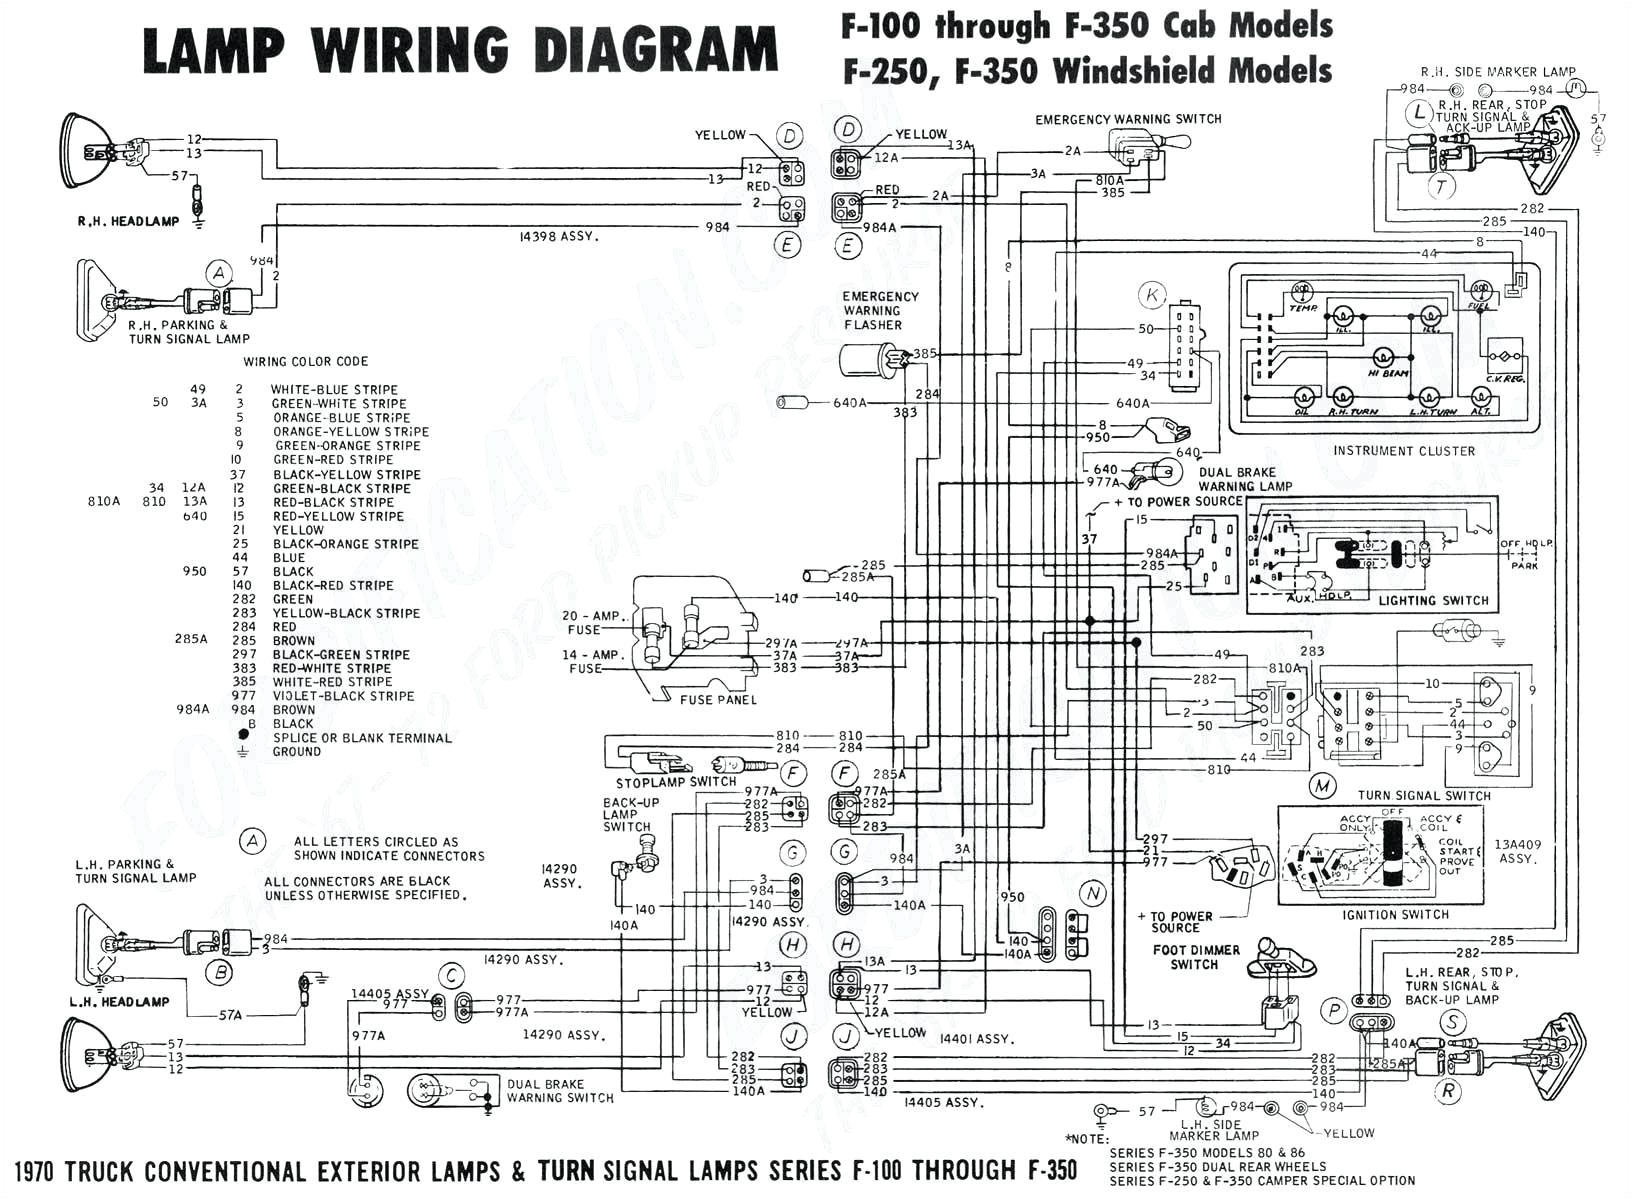 magic fan wire diagram wiring diagram show magic fan wire diagram source flex lite